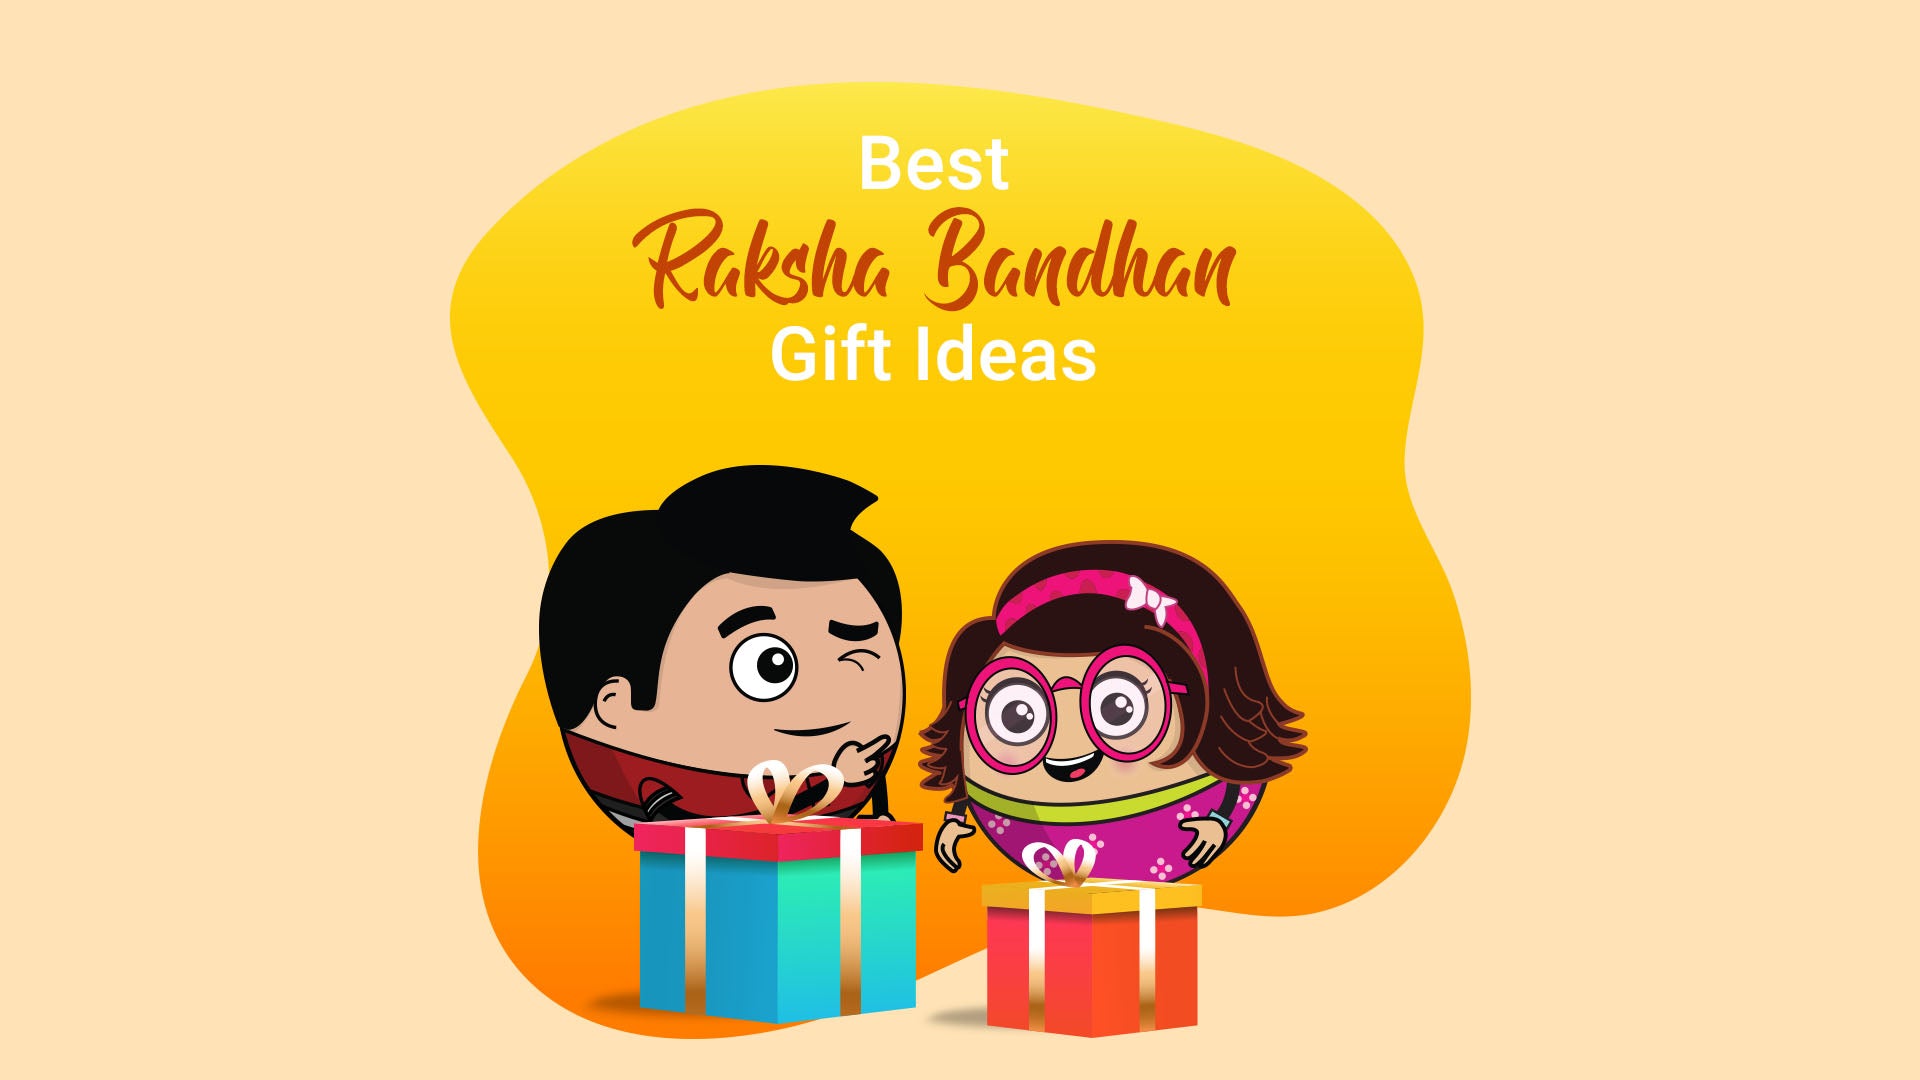 10 Best Raksha Bandhan Gift Ideas for Siblings